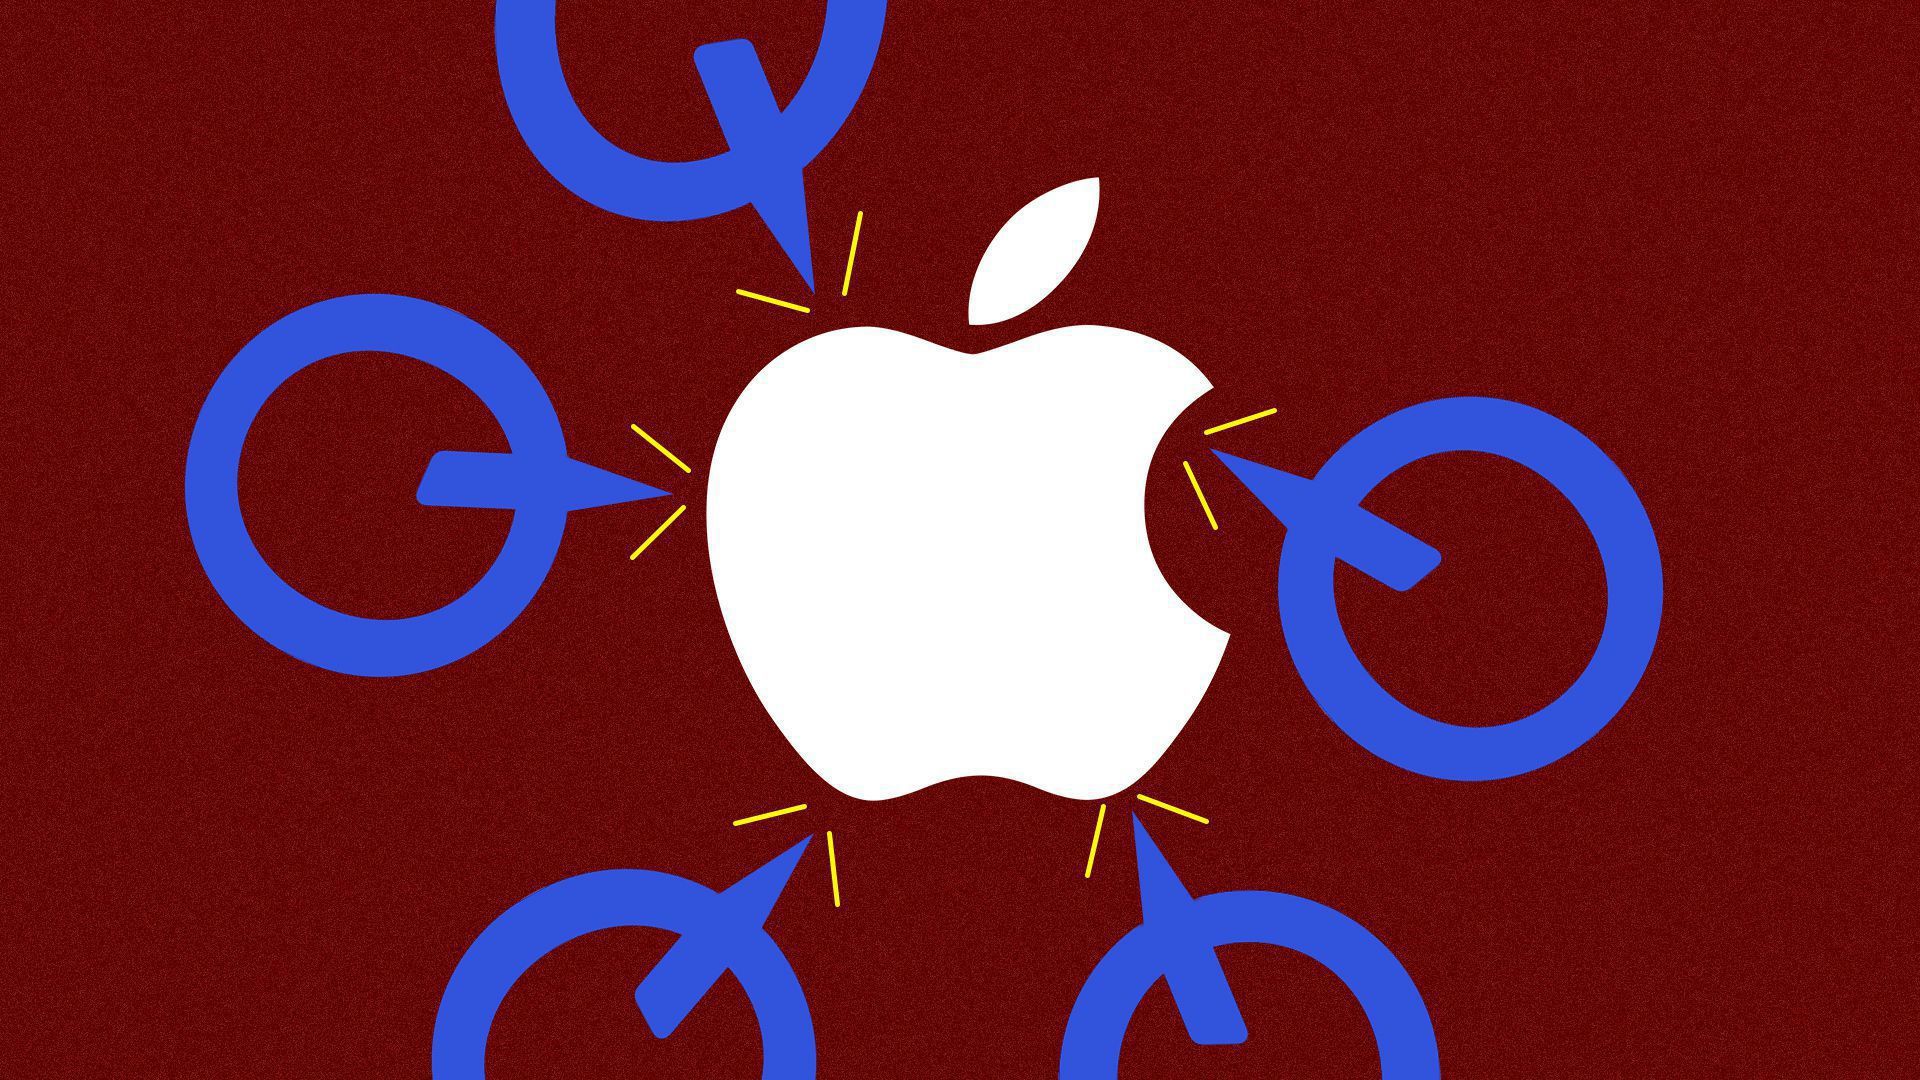 An illustration of Qualcomm logos taking aim at an Apple logo